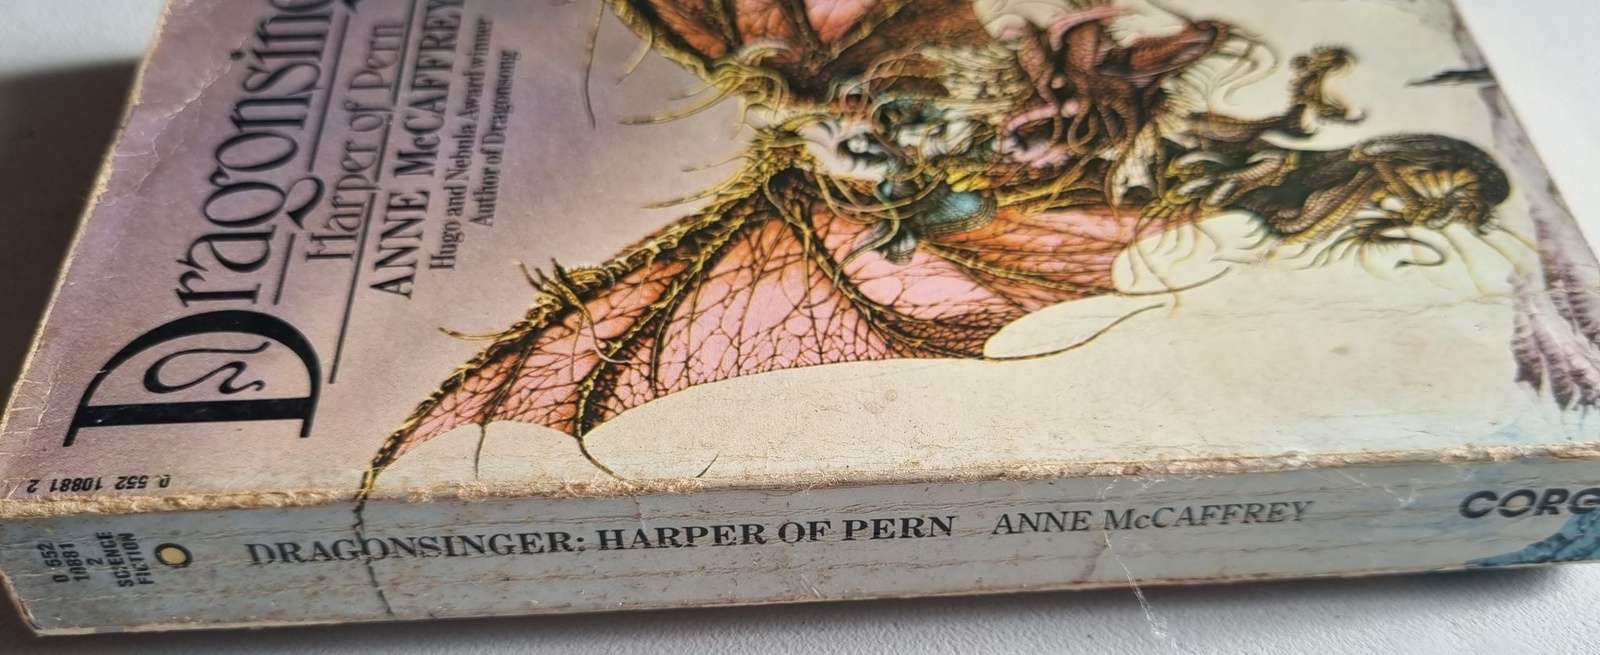 Dragonsinger: Harper of Pern - Anne McCaffrey